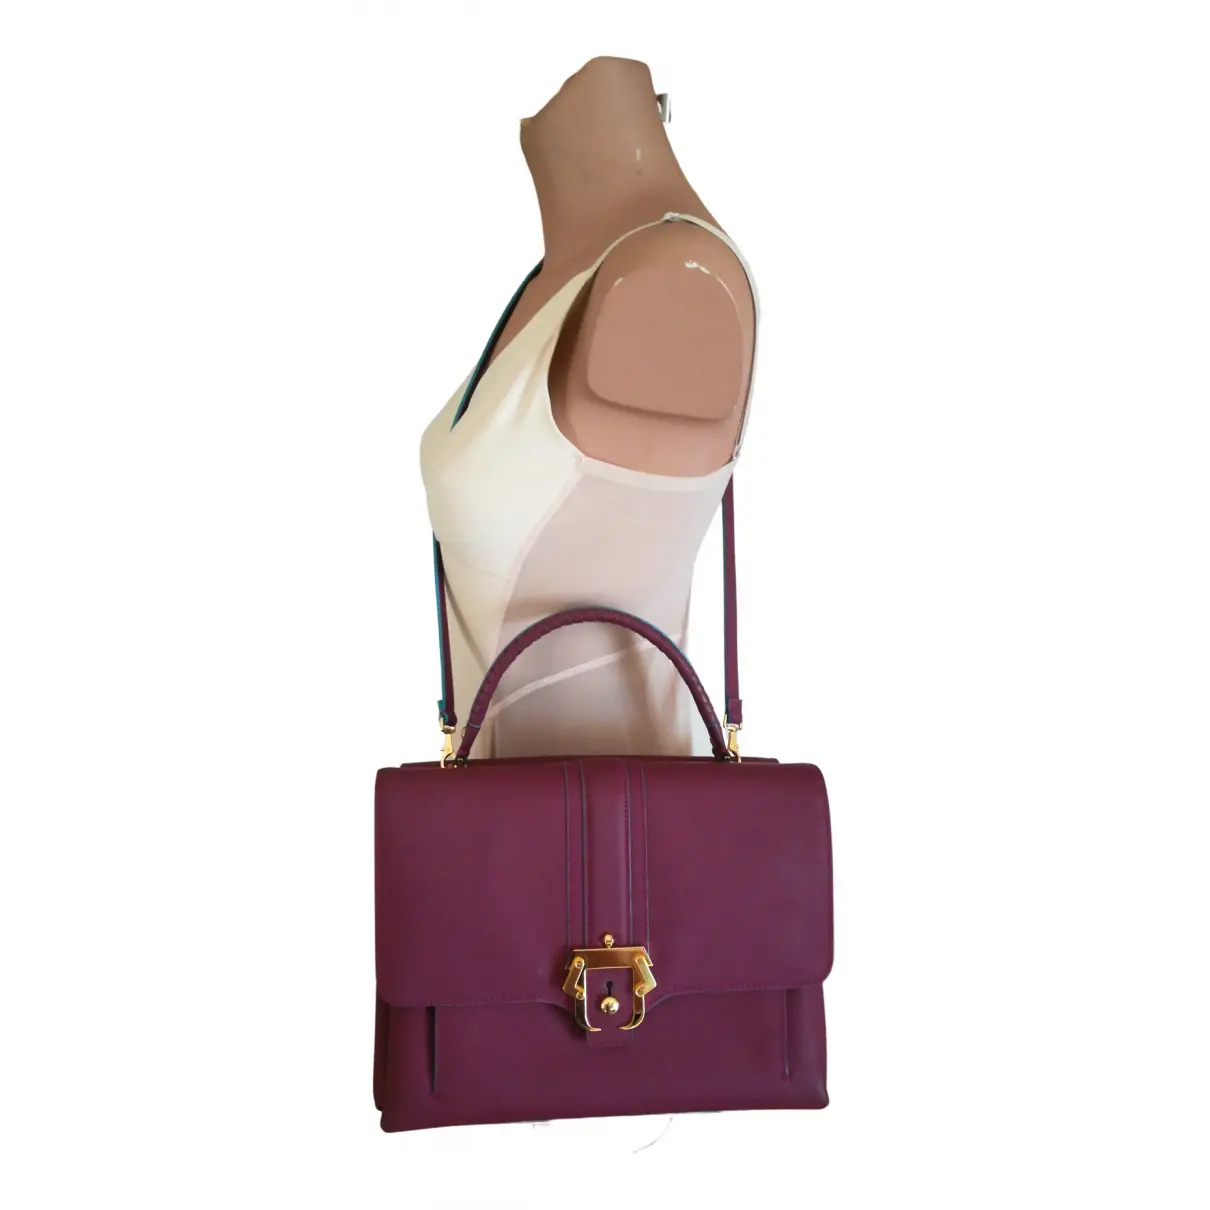 Buy Paula Cademartori Handbag online